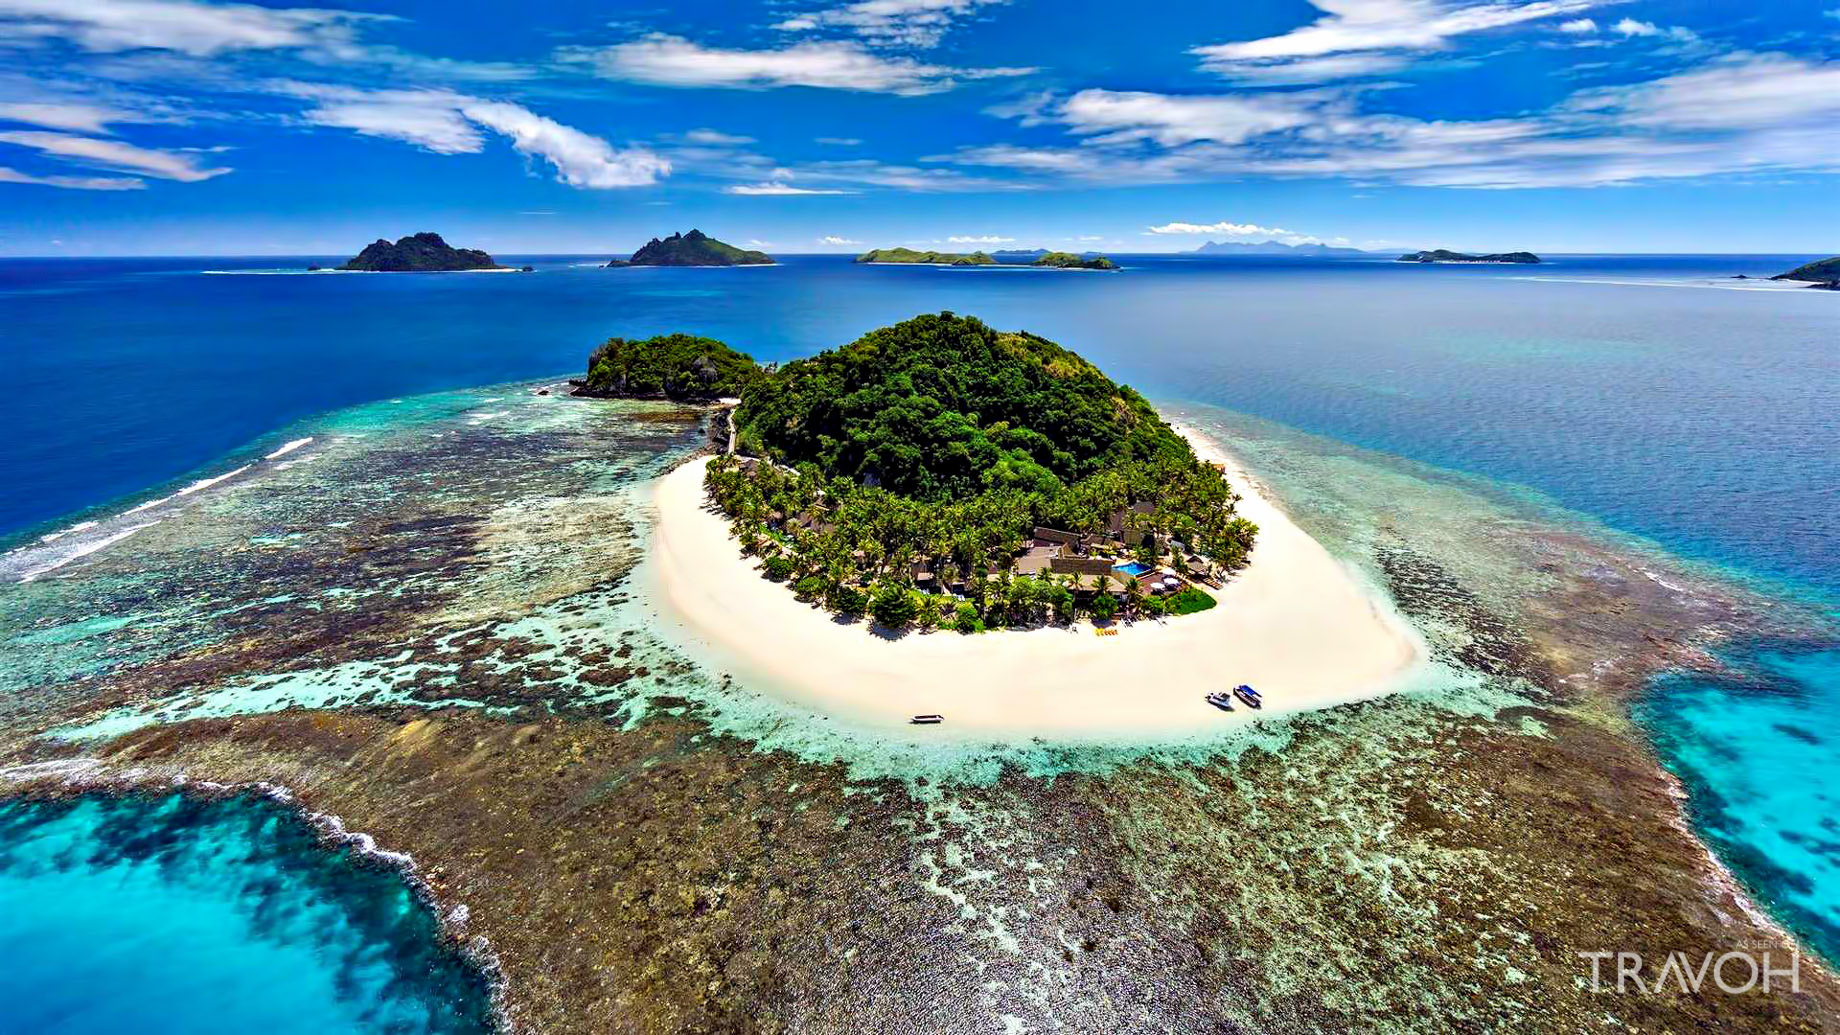 Matamanoa Island Resort - Exploring 10 of the Top Beach Locations on the Islands of Fiji